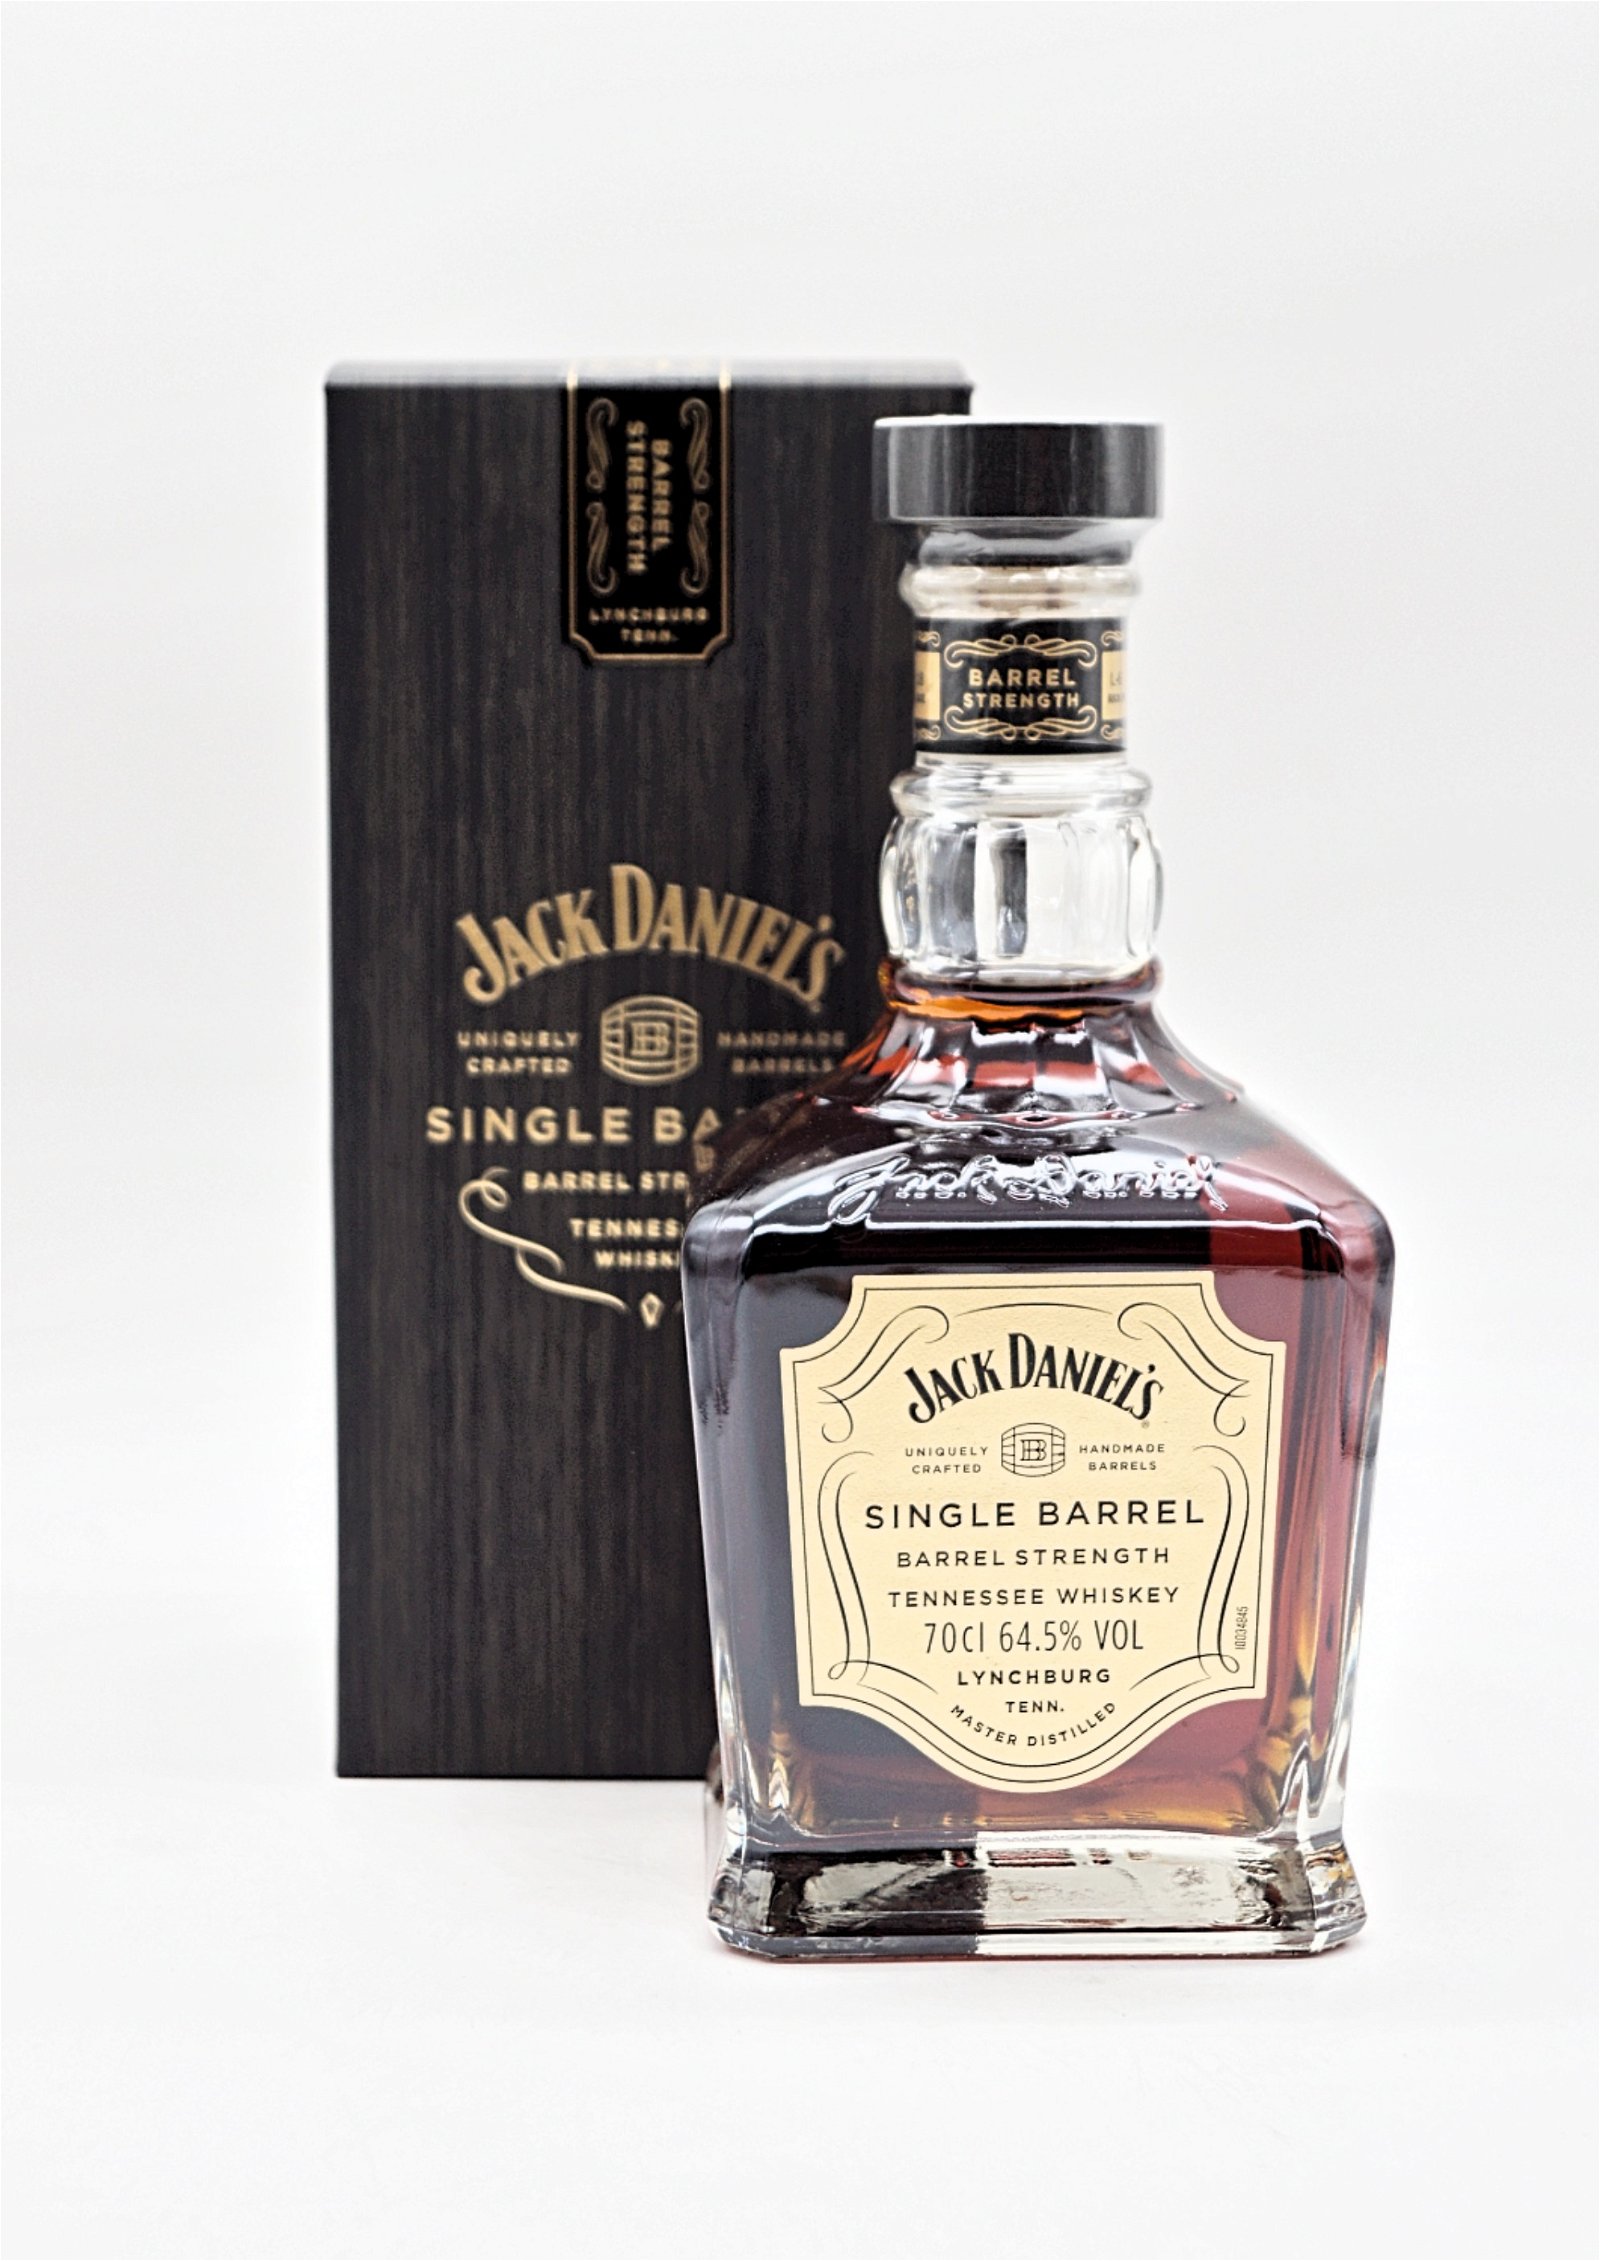 Jack Daniels Single Barrel Barrel Strength Tennessee Whiskey